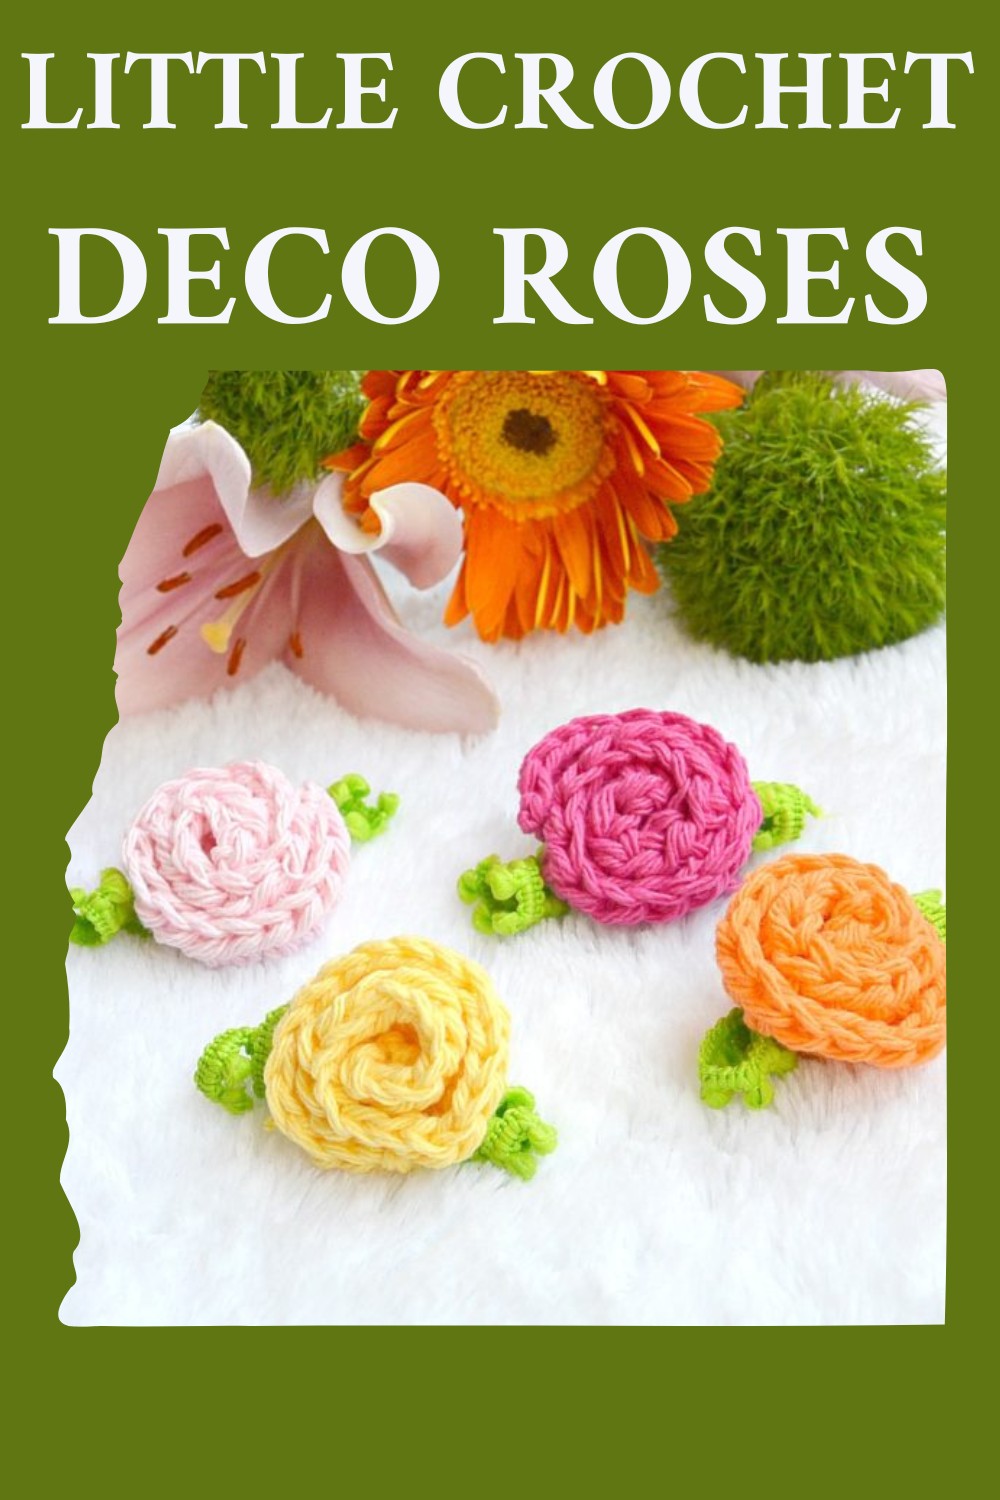 Little Crochet Deco Roses Pattern